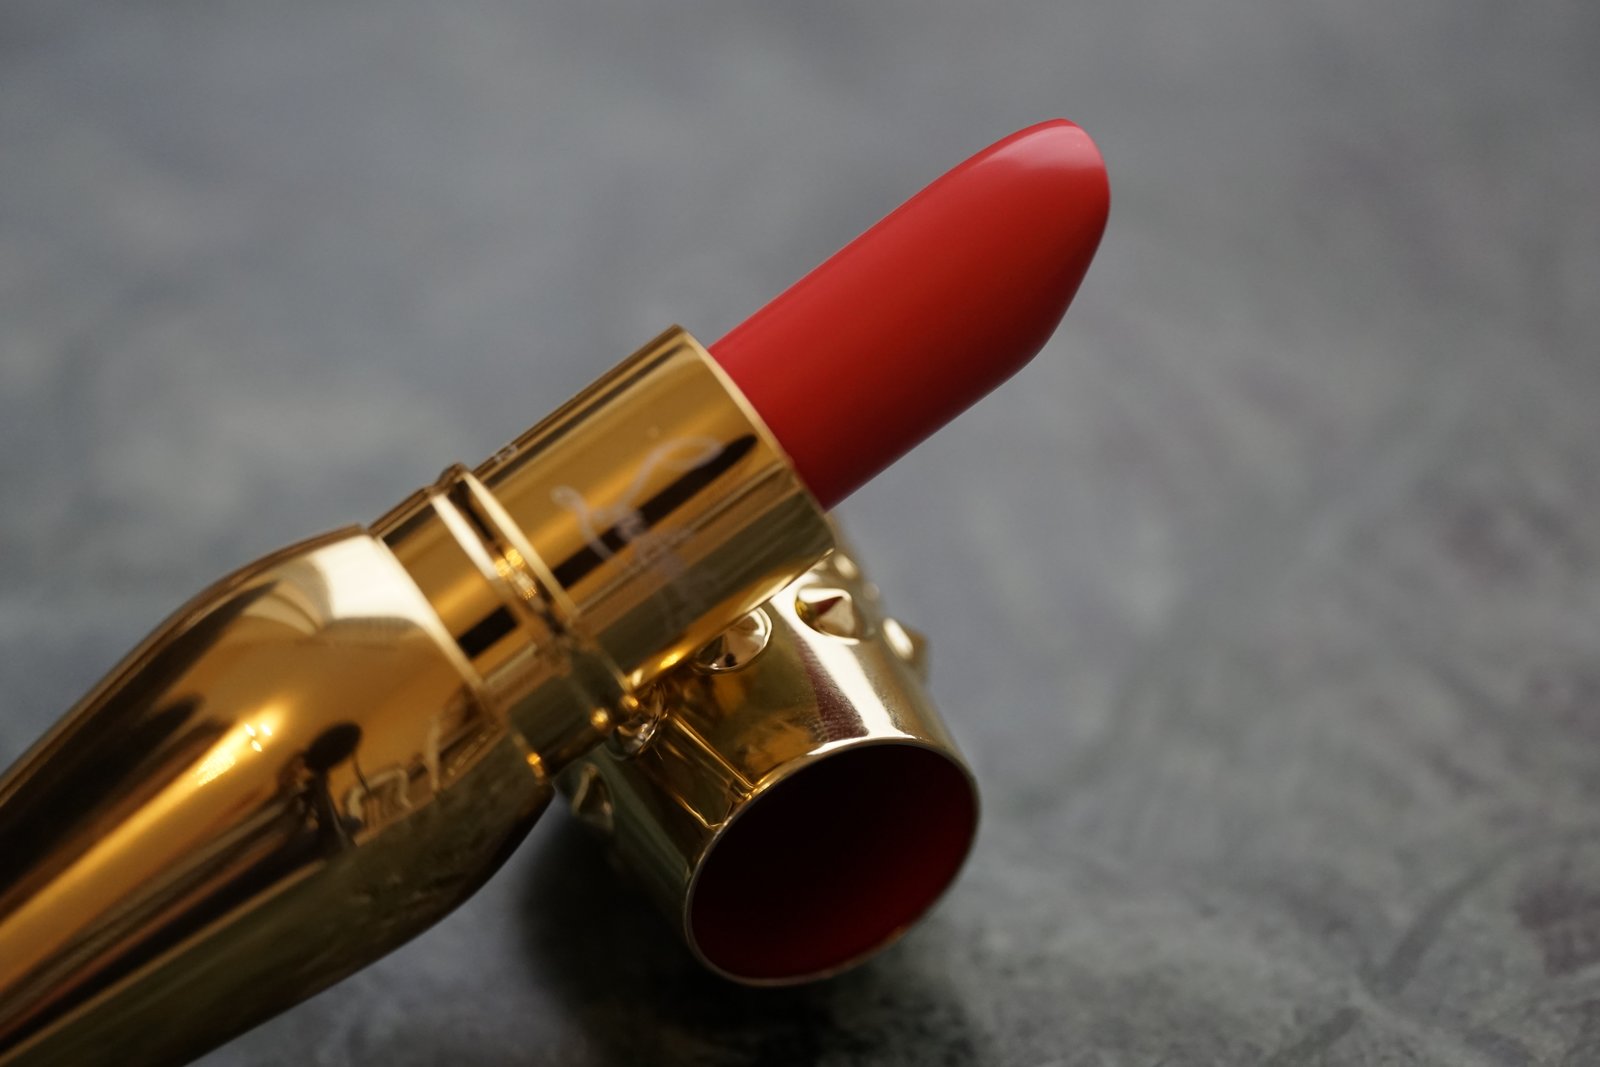 Macro shot of Miss Loubi lipstick